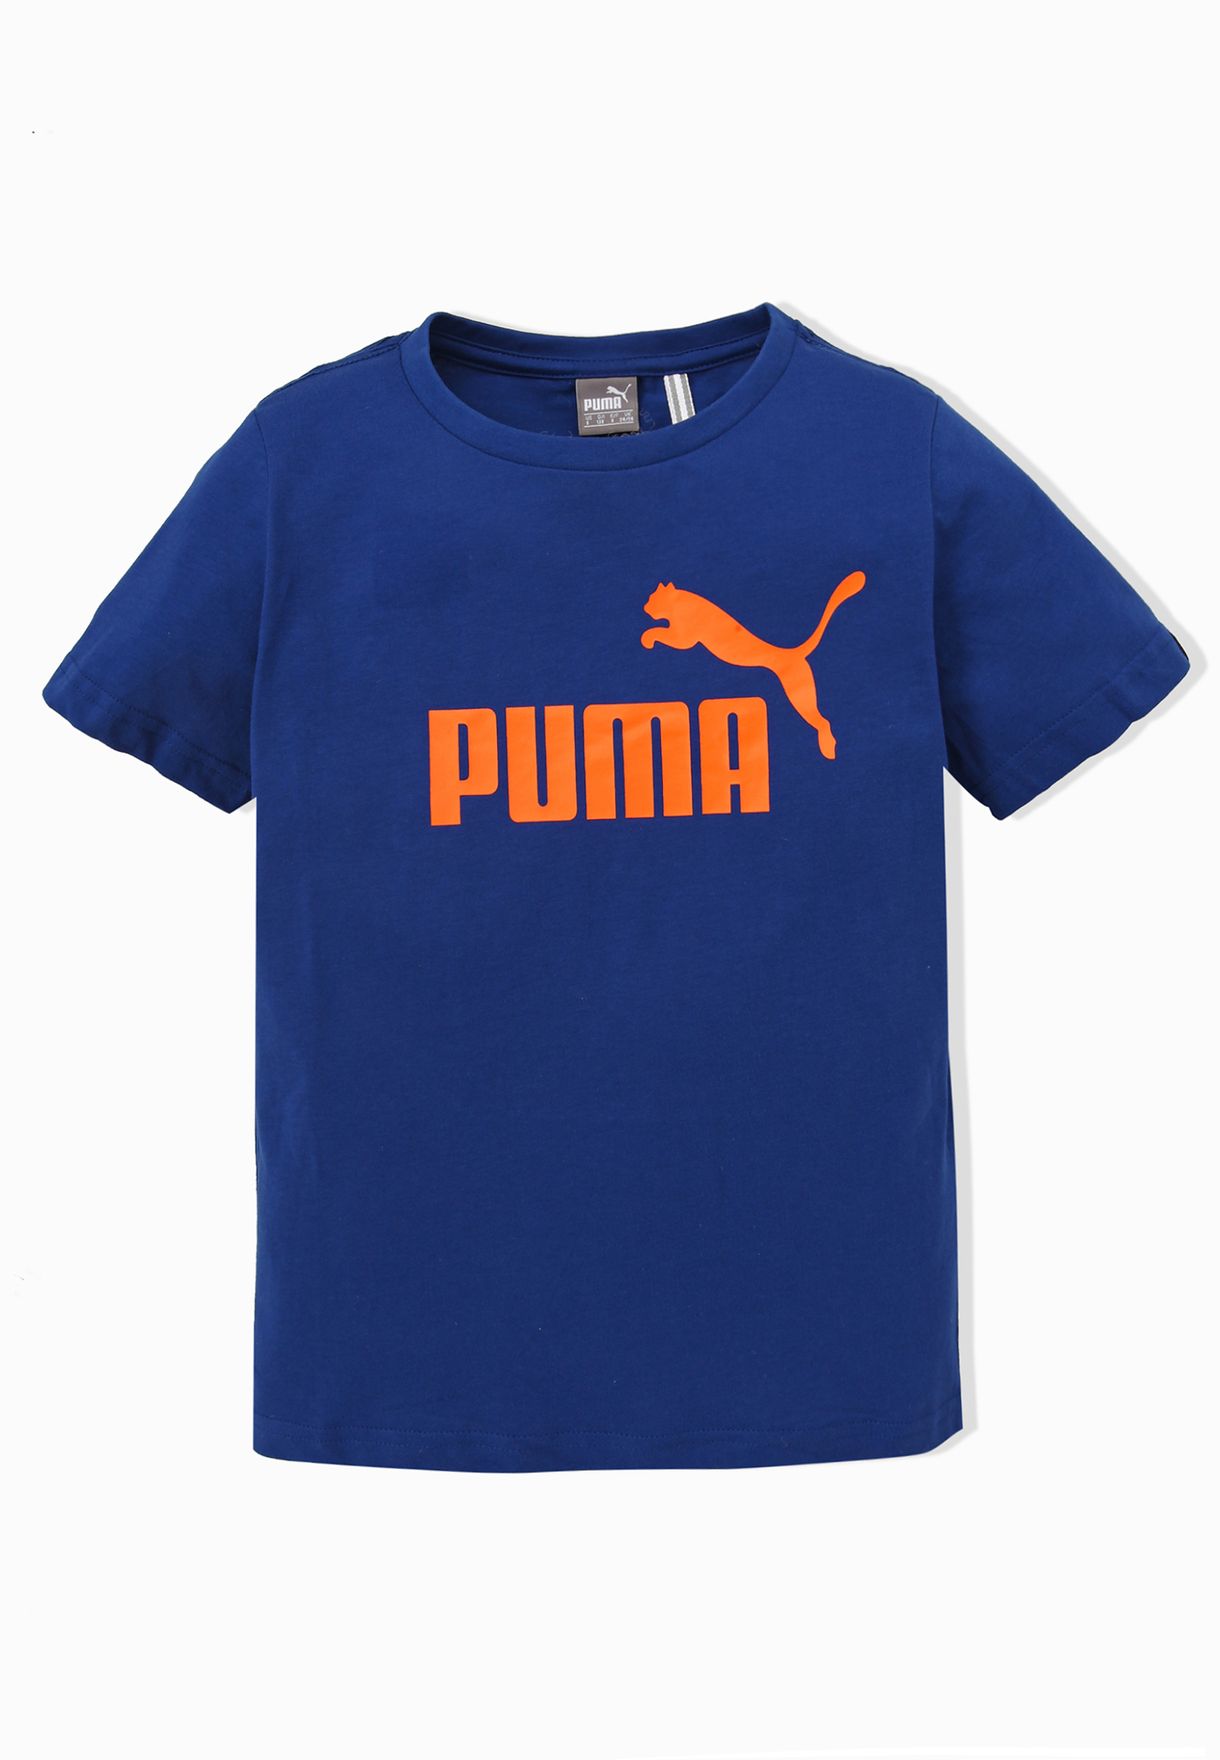 puma blue and orange